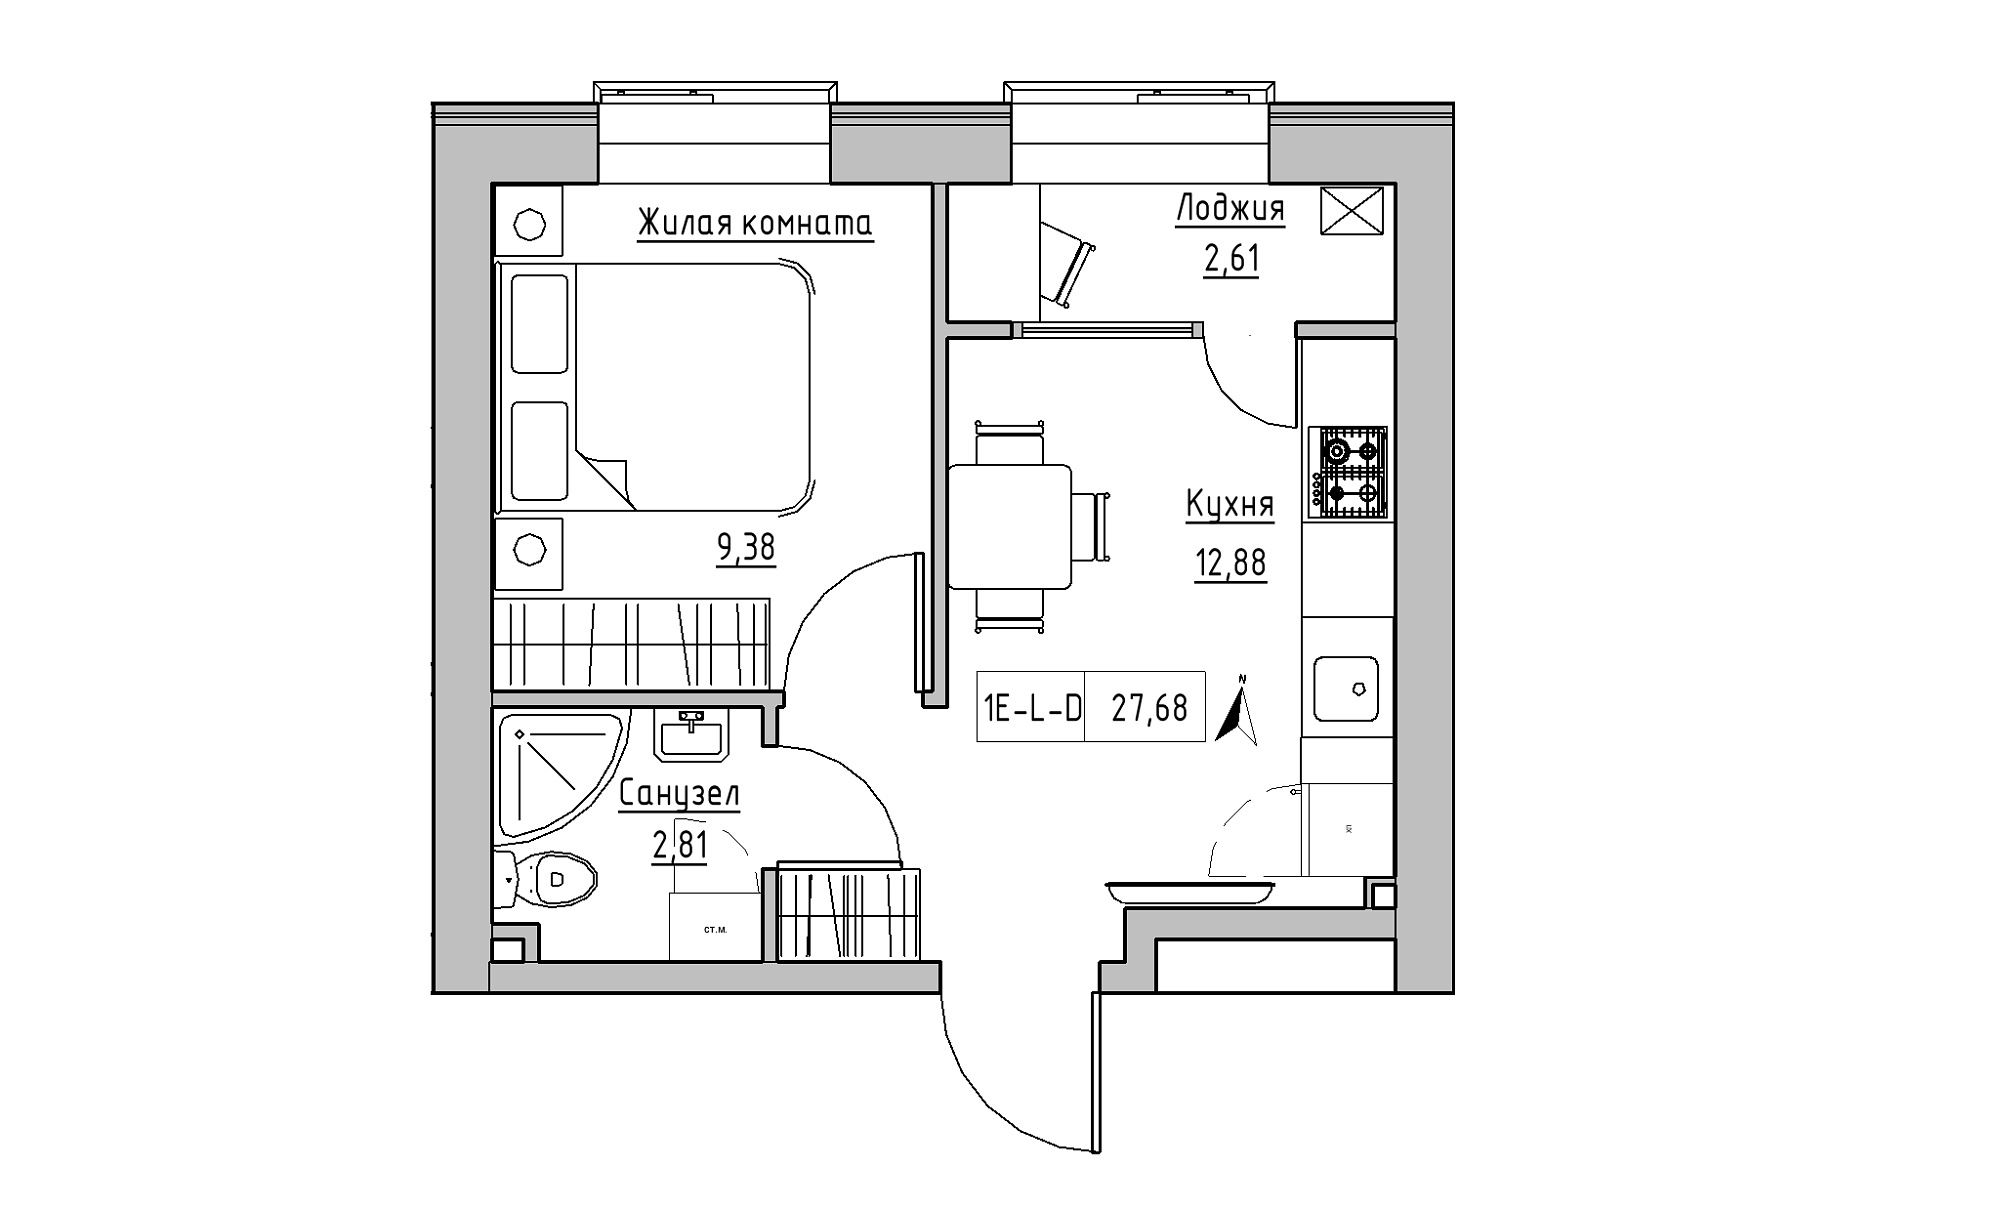 Planning 1-rm flats area 27.68m2, KS-016-01/0001.